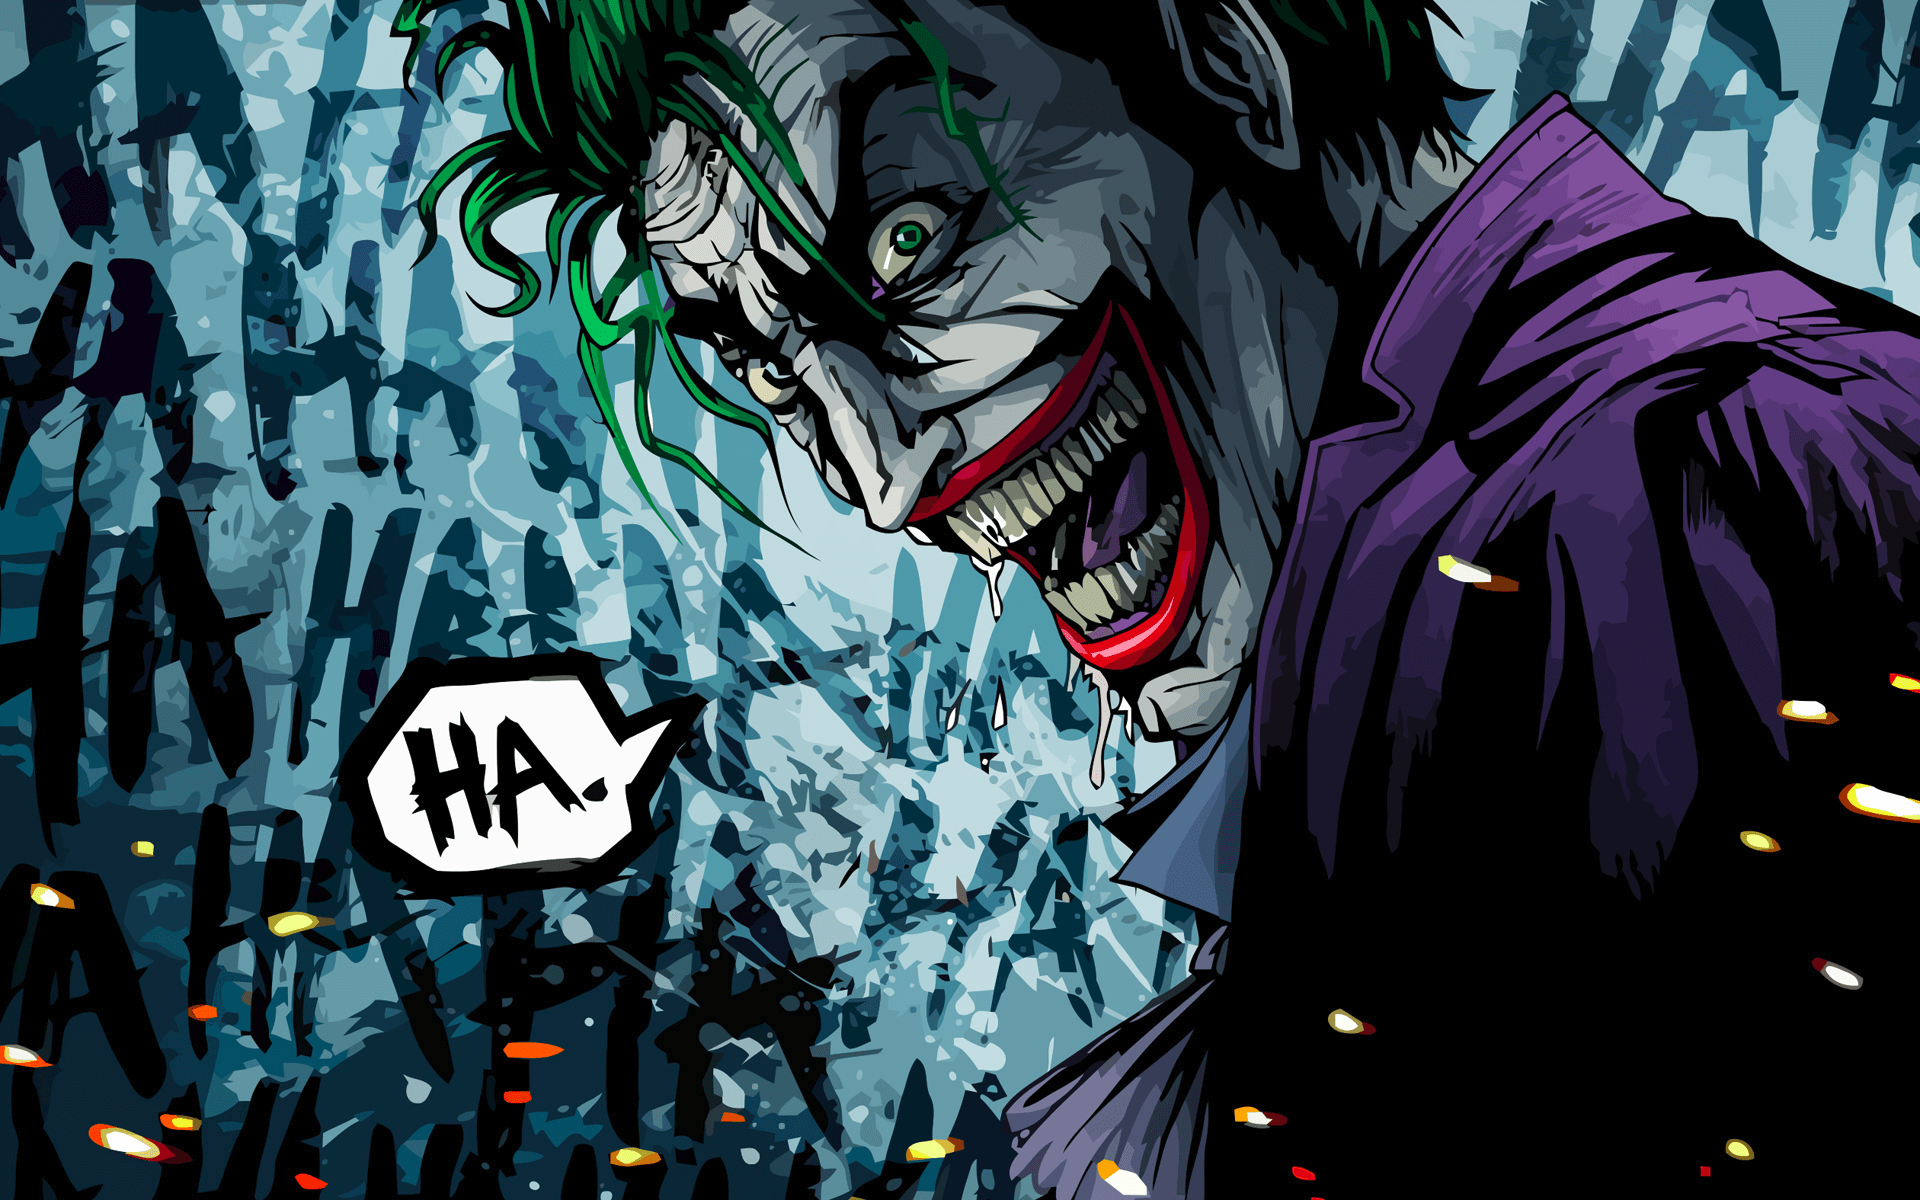 Joker Cartoon Wallpaper